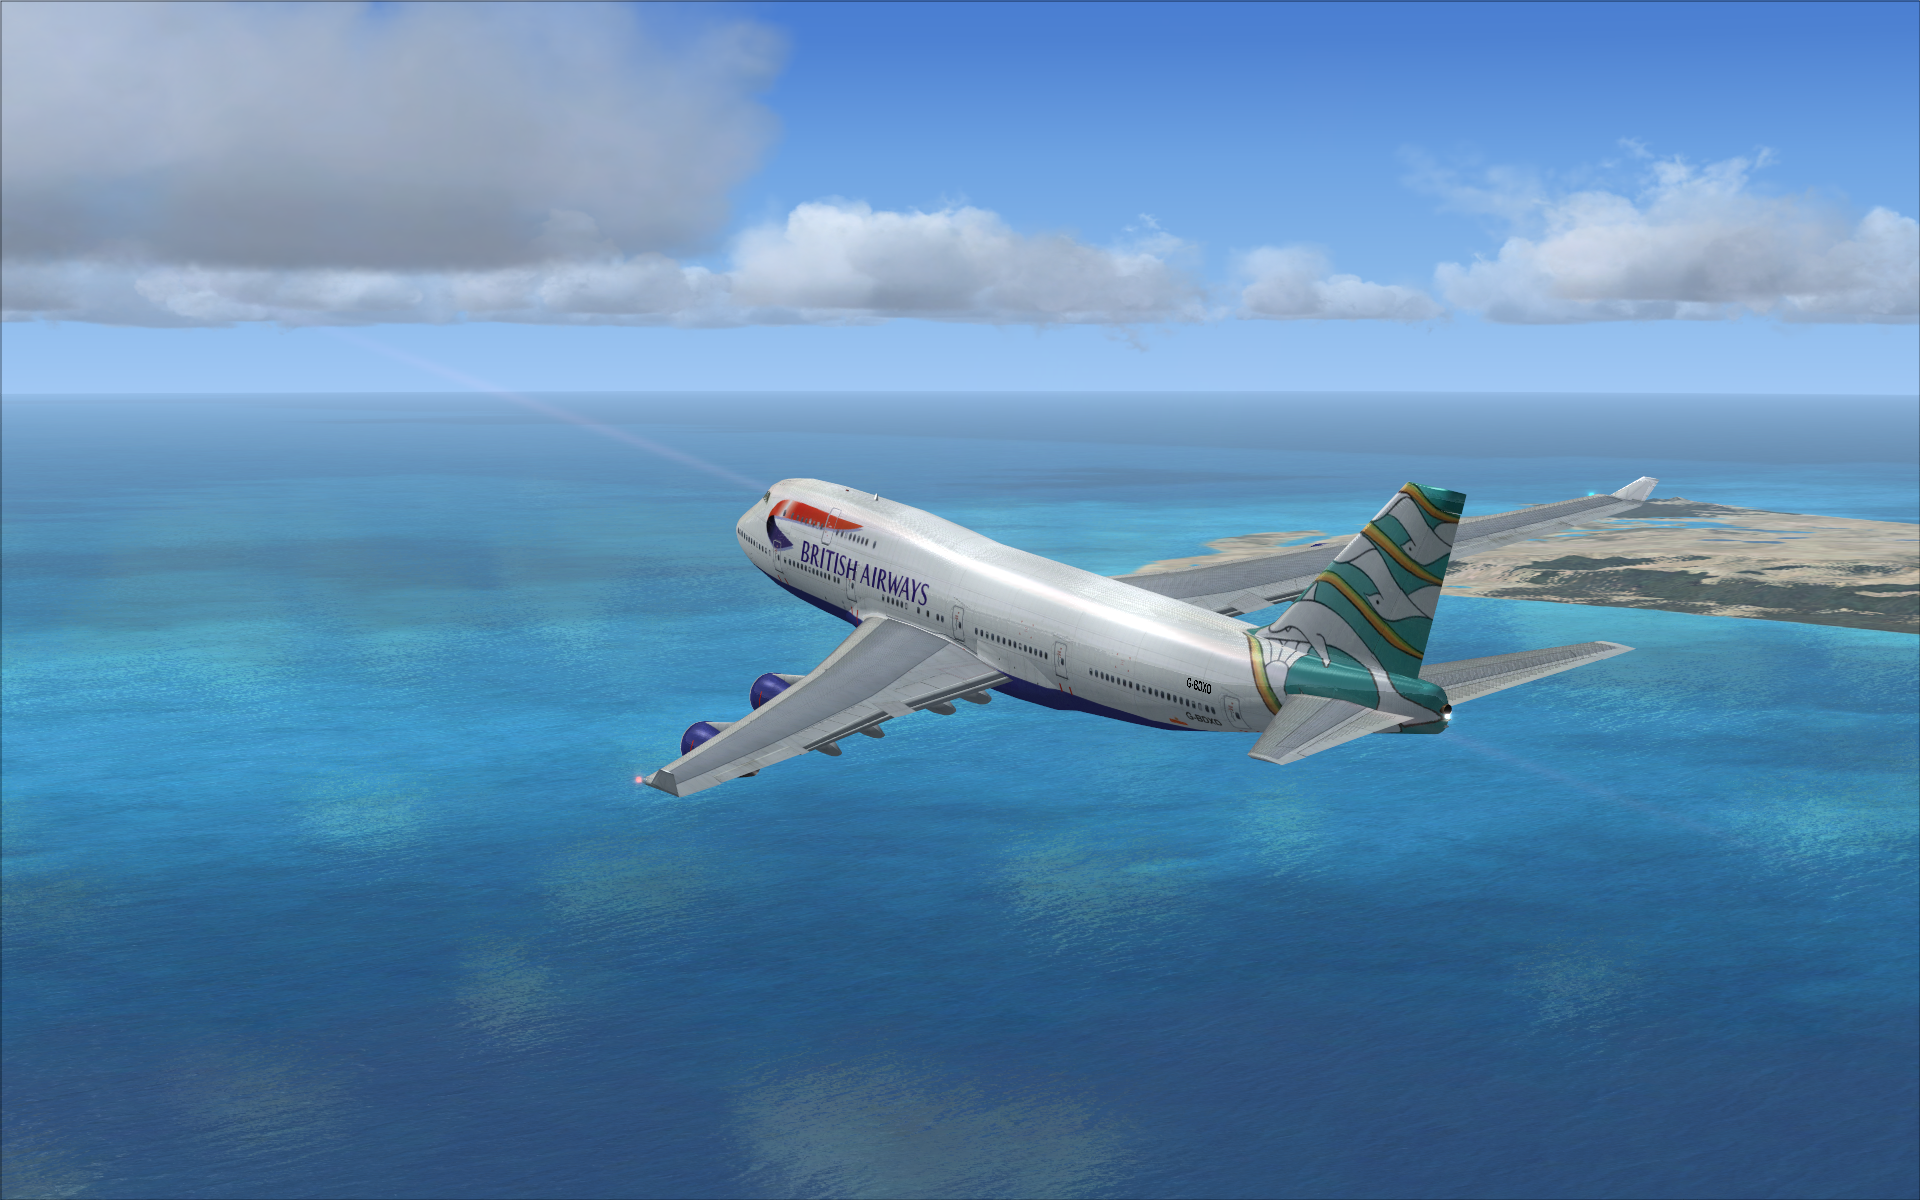 Microsoft Flight Simulator X Deluxe